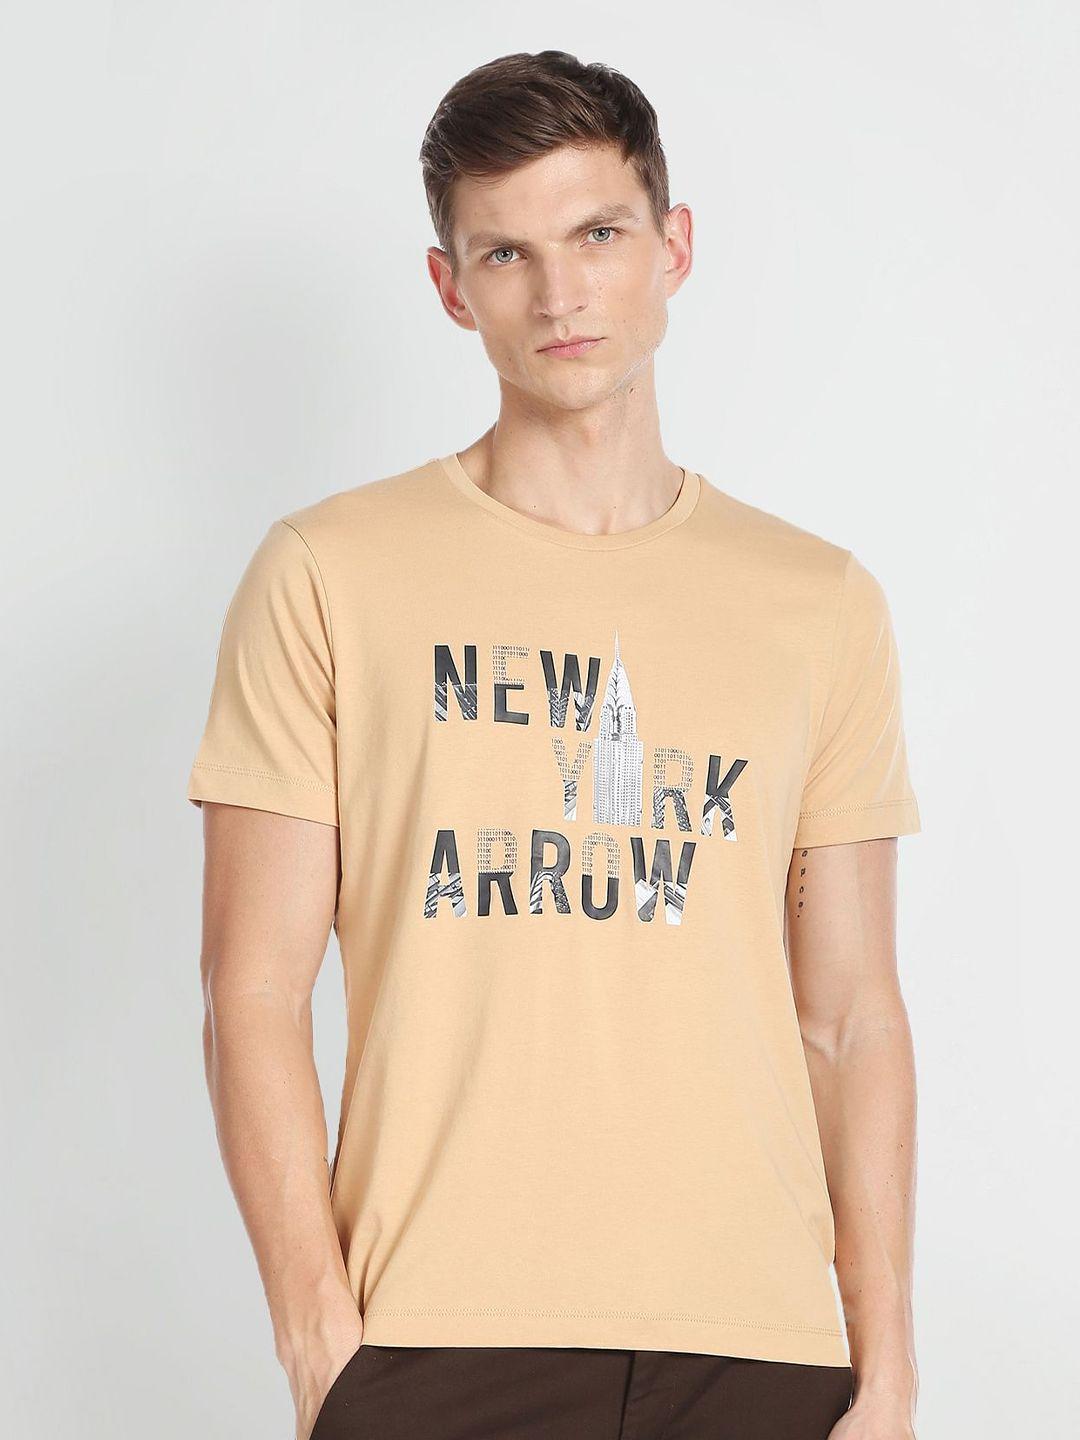 arrow-new-york-typography-printed-cotton-t-shirt